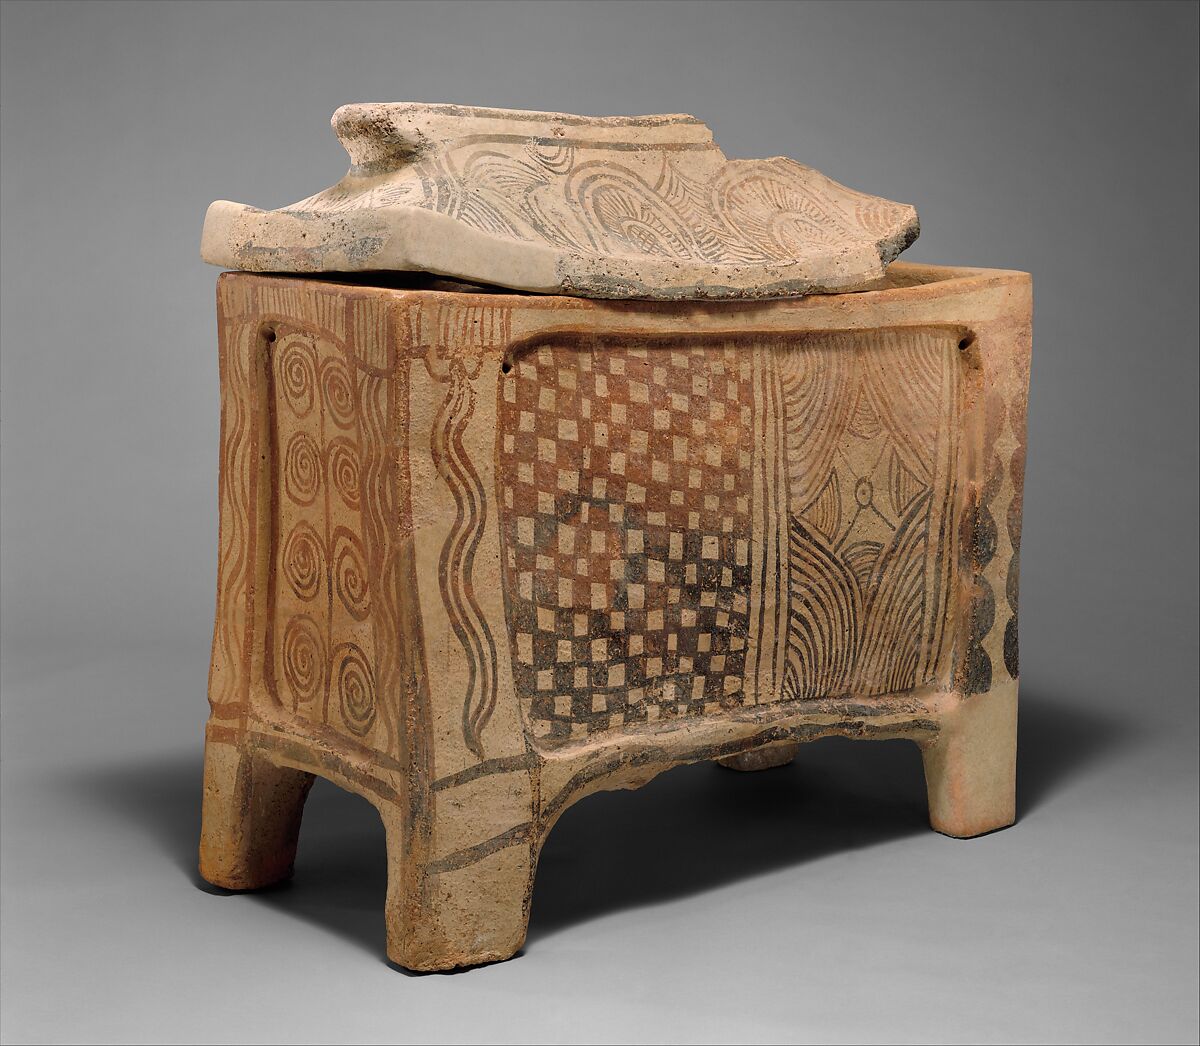 Terracotta larnax (chest-shaped coffin), Terracotta, Minoan 